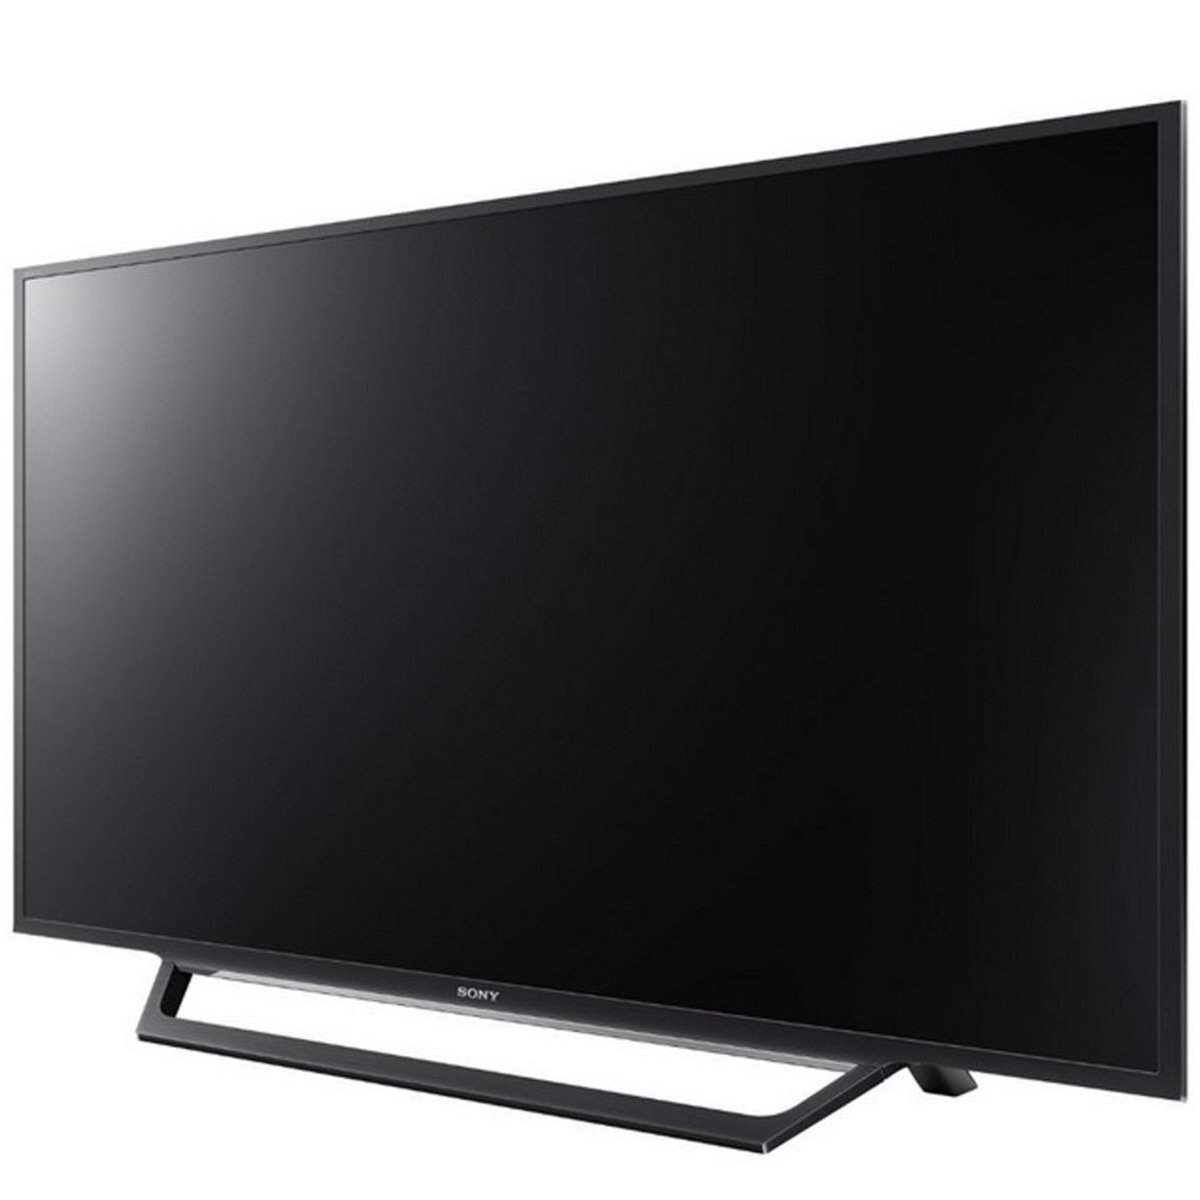 Sony Smart Full HD LED TV KDL40W650D 40inch